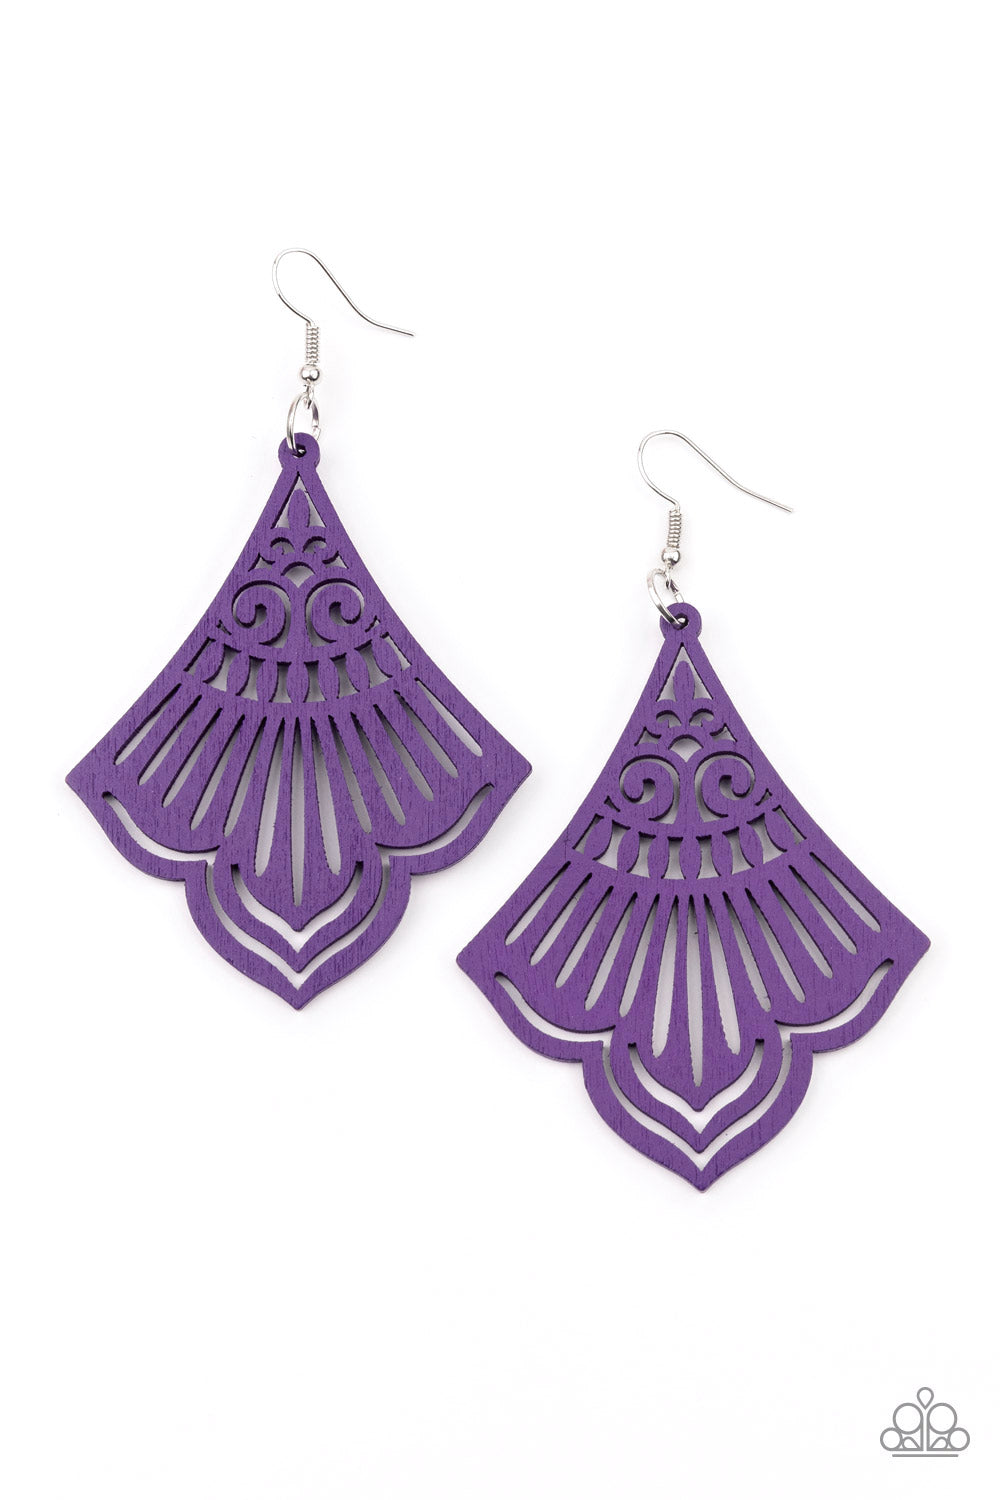 Eastern Escape - Purple Wood Earrings - Princess Glam Shop